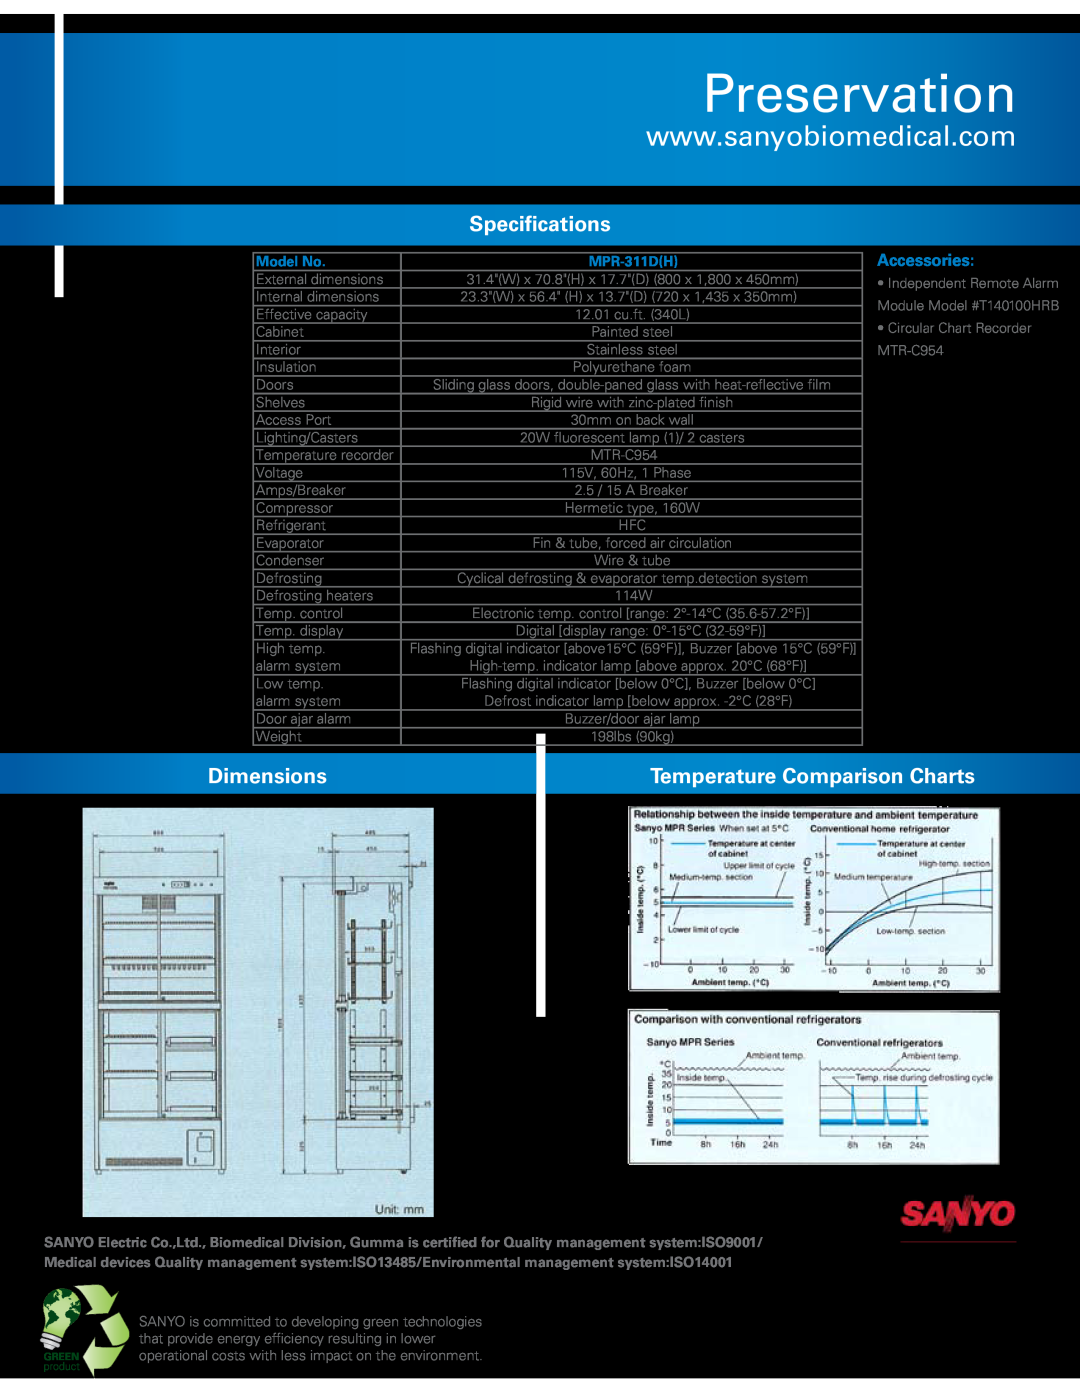 Sanyo MPR-311D(H) manual Accessories, Preservation, Specifications, Dimensions, Temperature Comparison Charts, Model No 